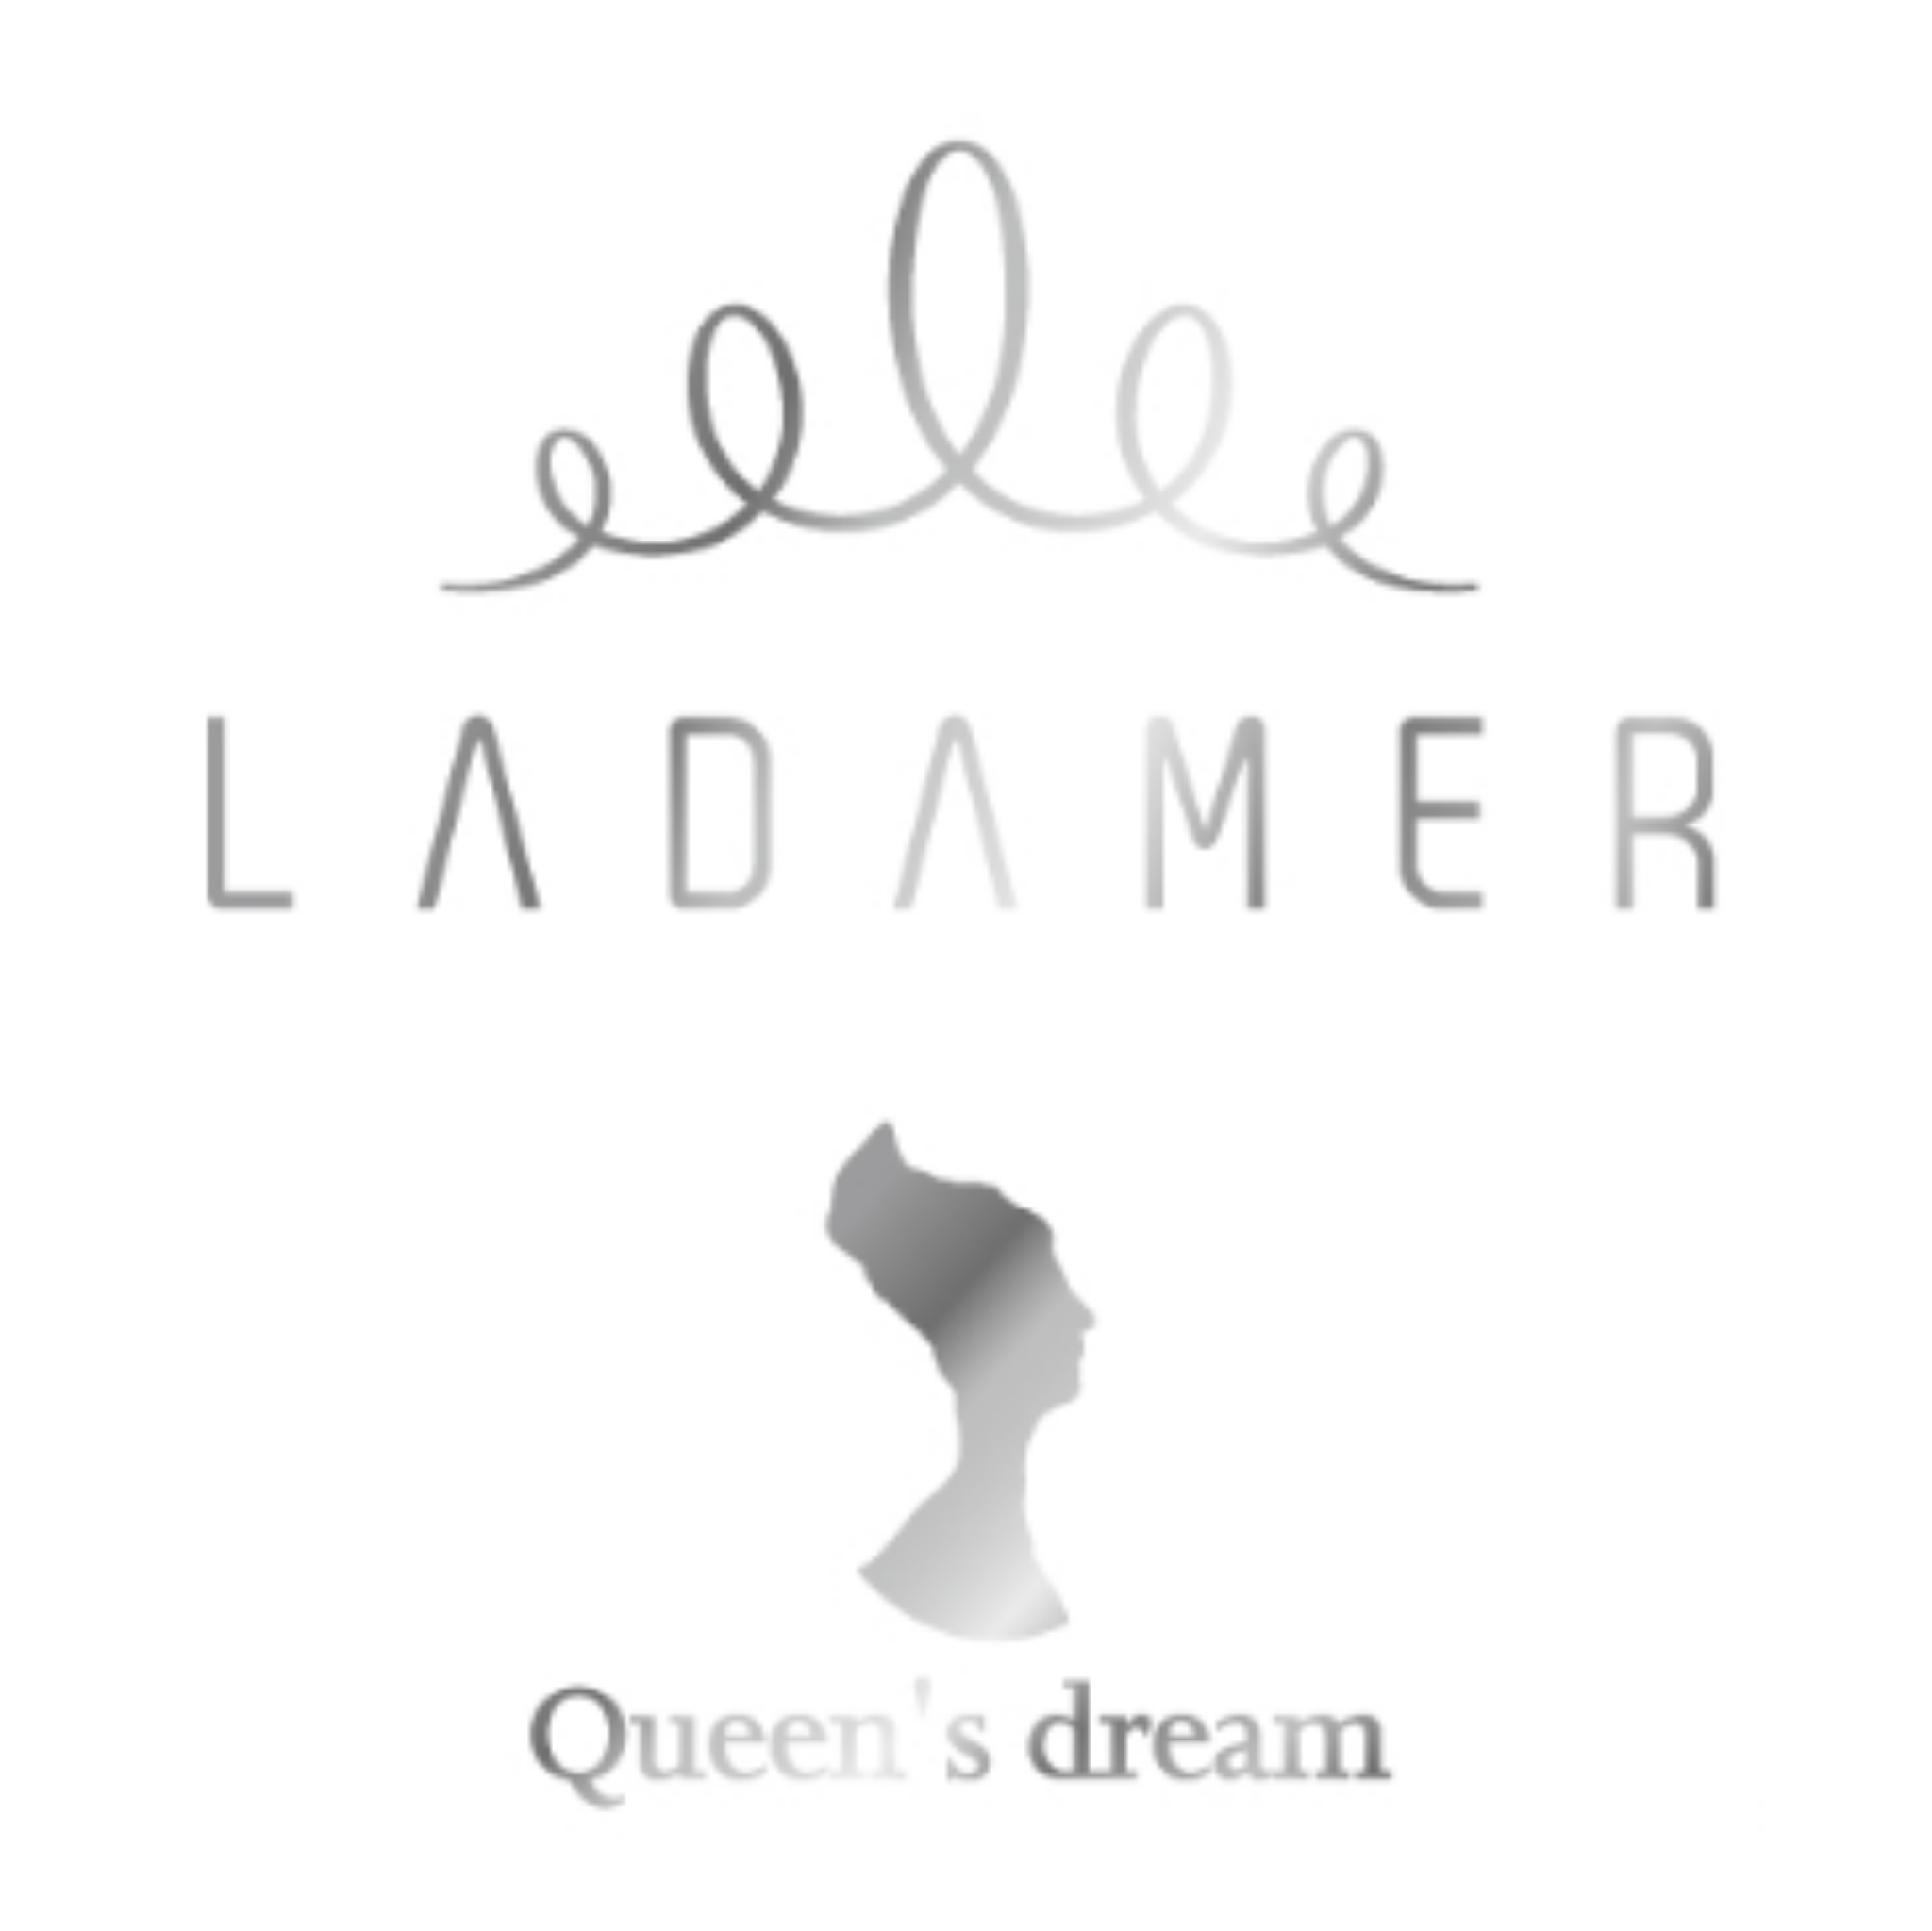 Ladamer